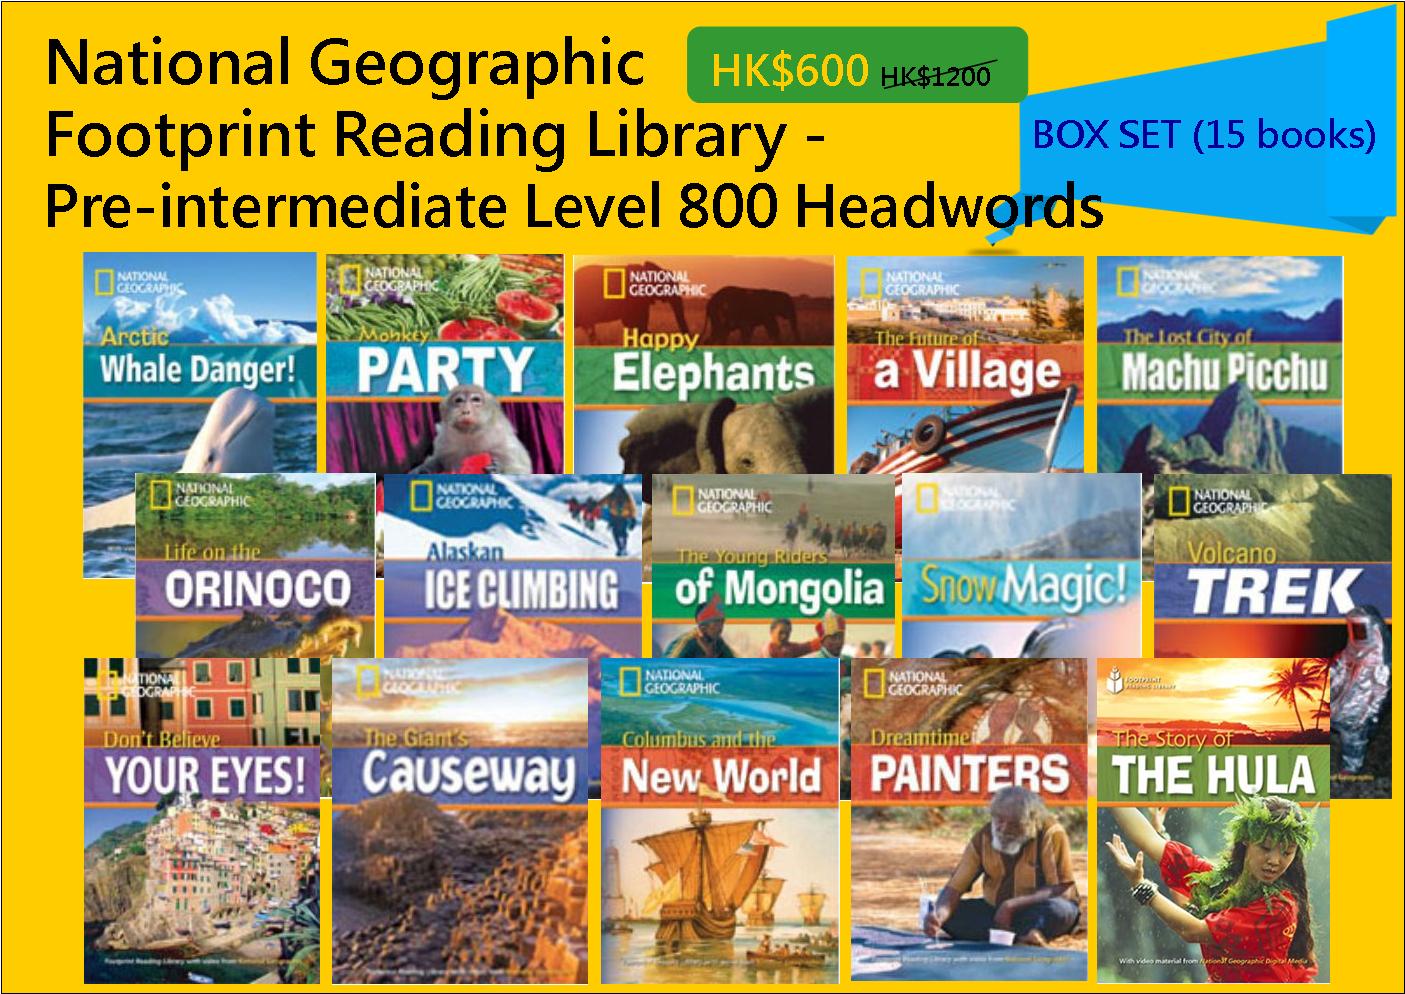 National Geographic Footprint Reading Library - Pre-intermediate Level 800 Headwords (Box Set - 15 books)